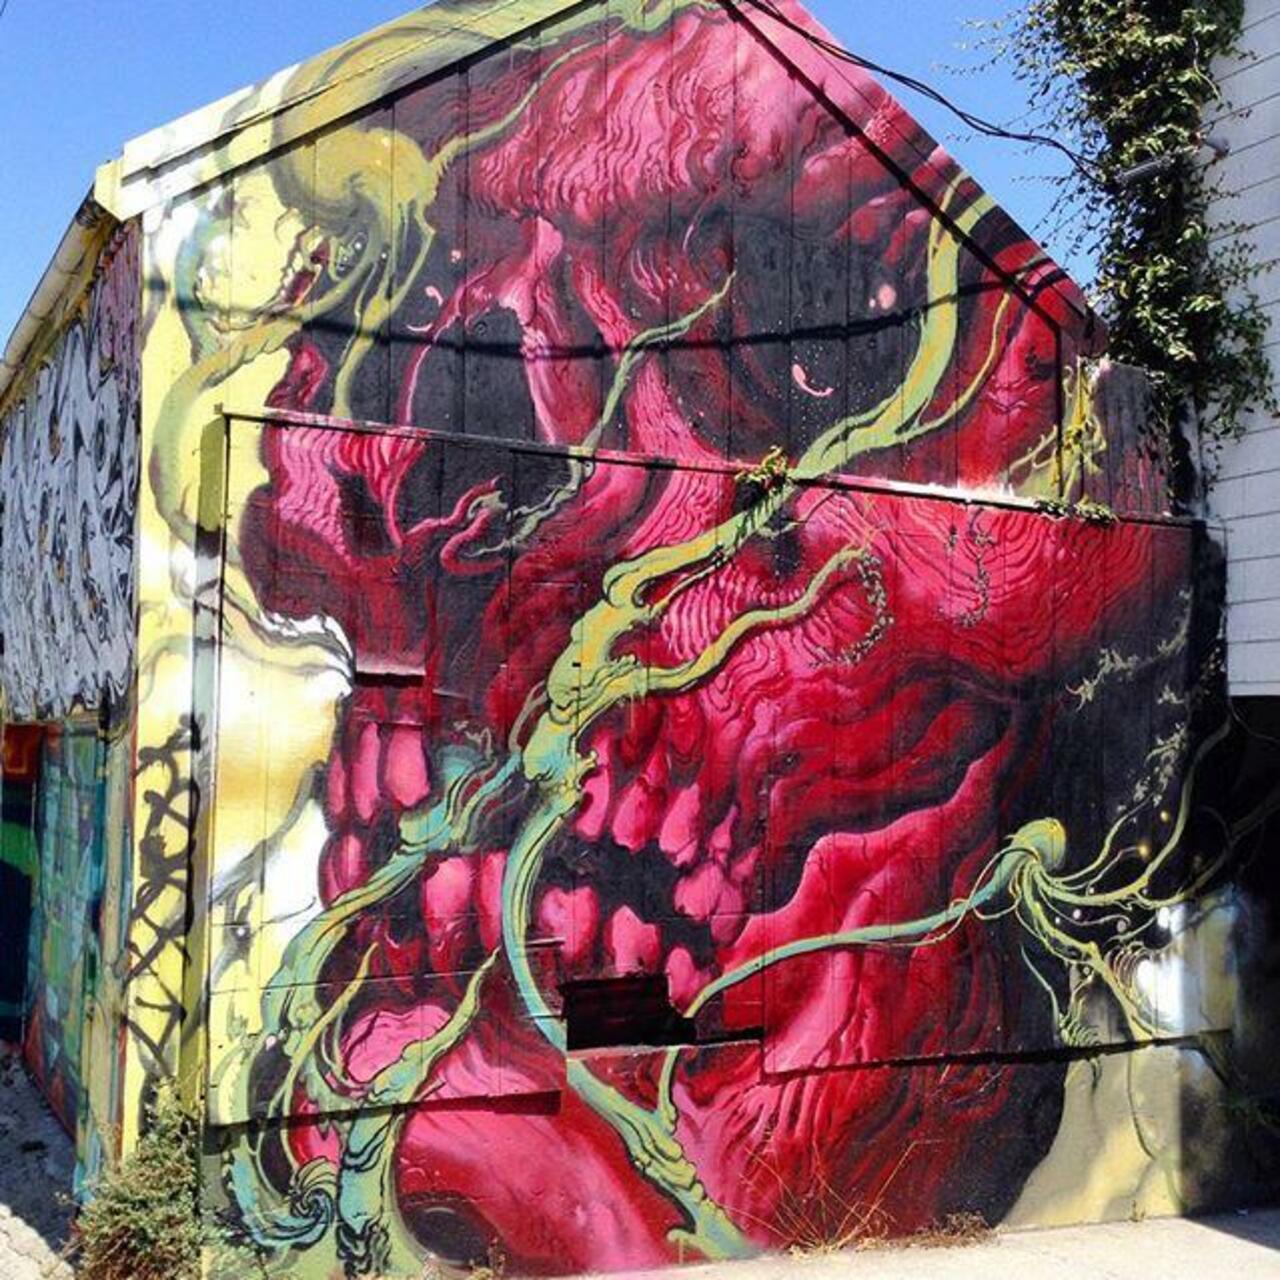 RT @GoogleStreetArt: Street Art found in San Francisco  

#art #graffiti #mural #streetart http://t.co/0eK5U9wxPA